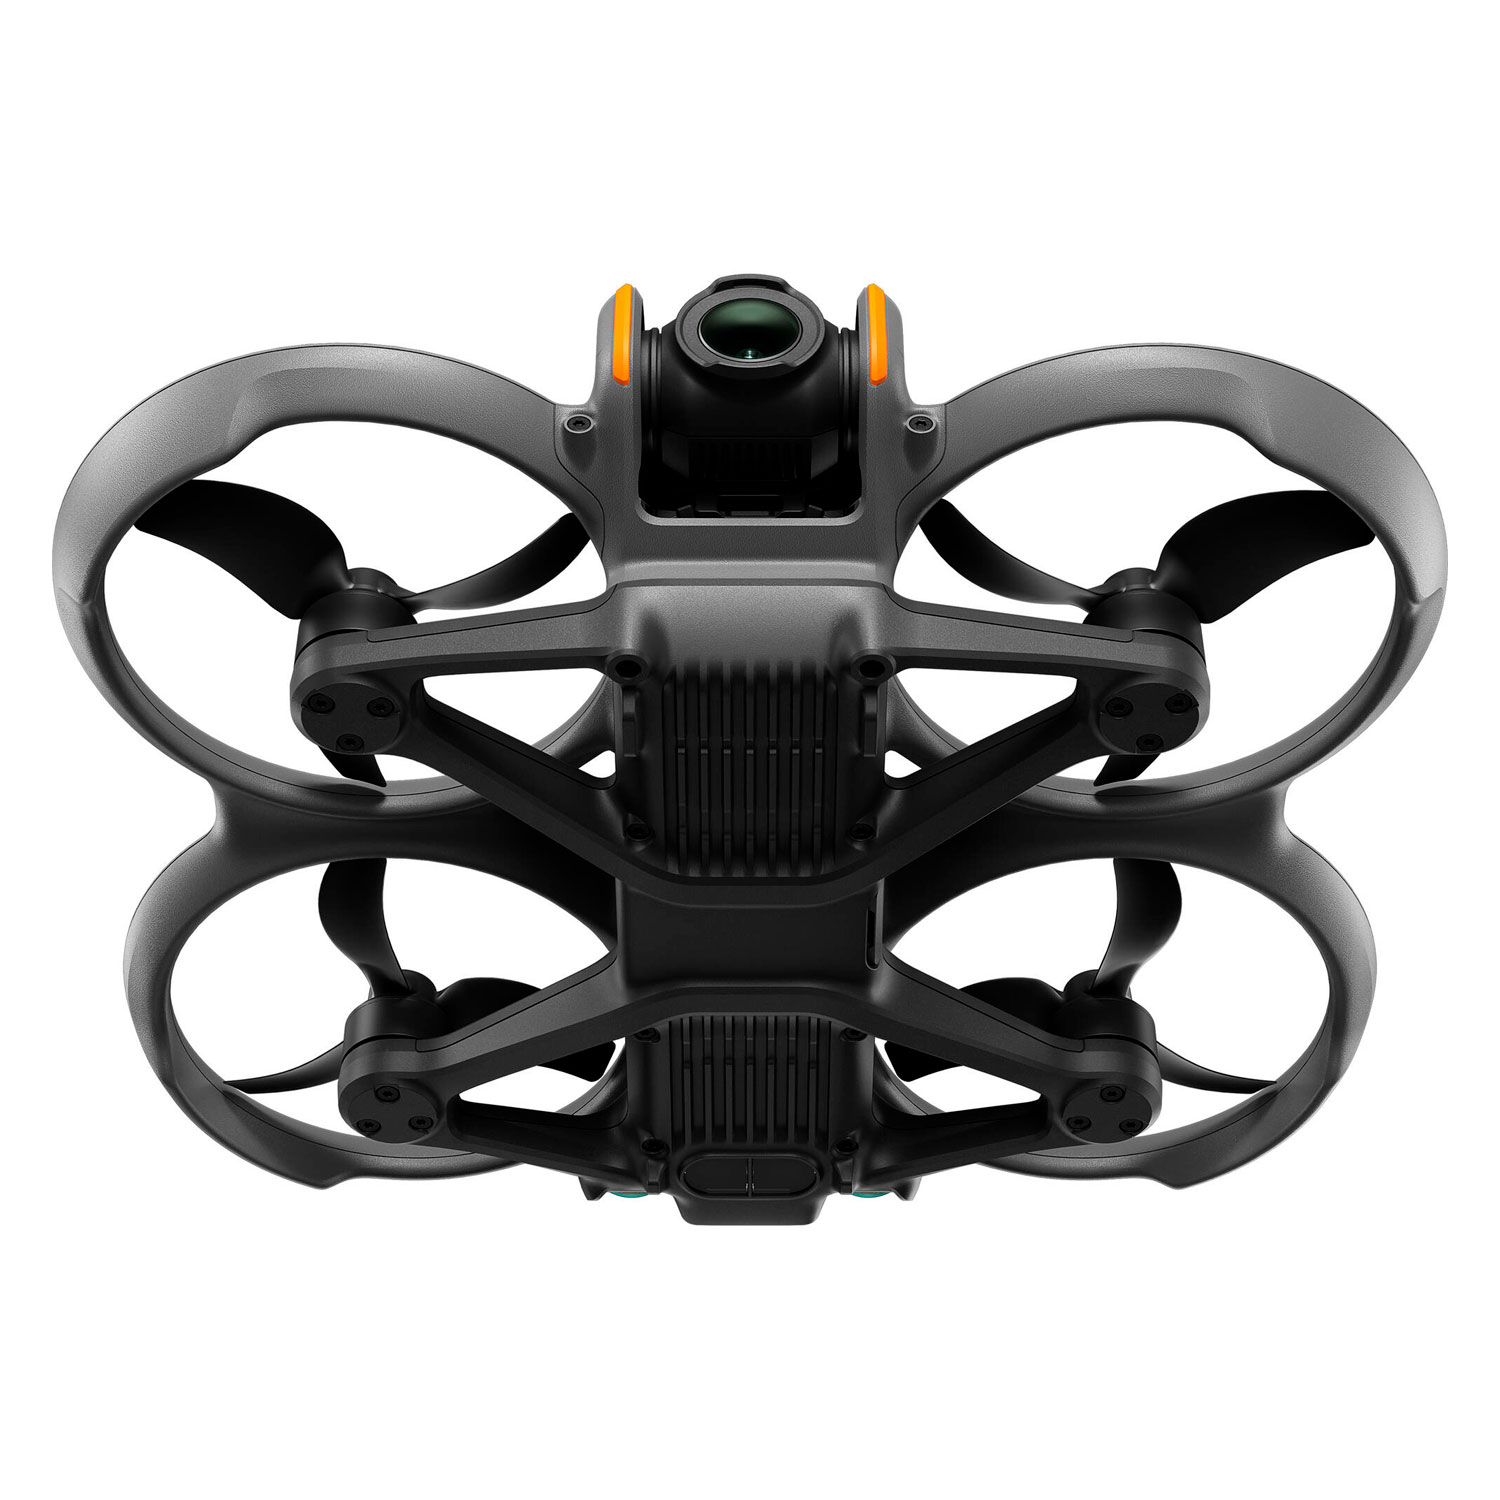 Drone DJI Avata 2 Fly More Combo - (1 Bateria)